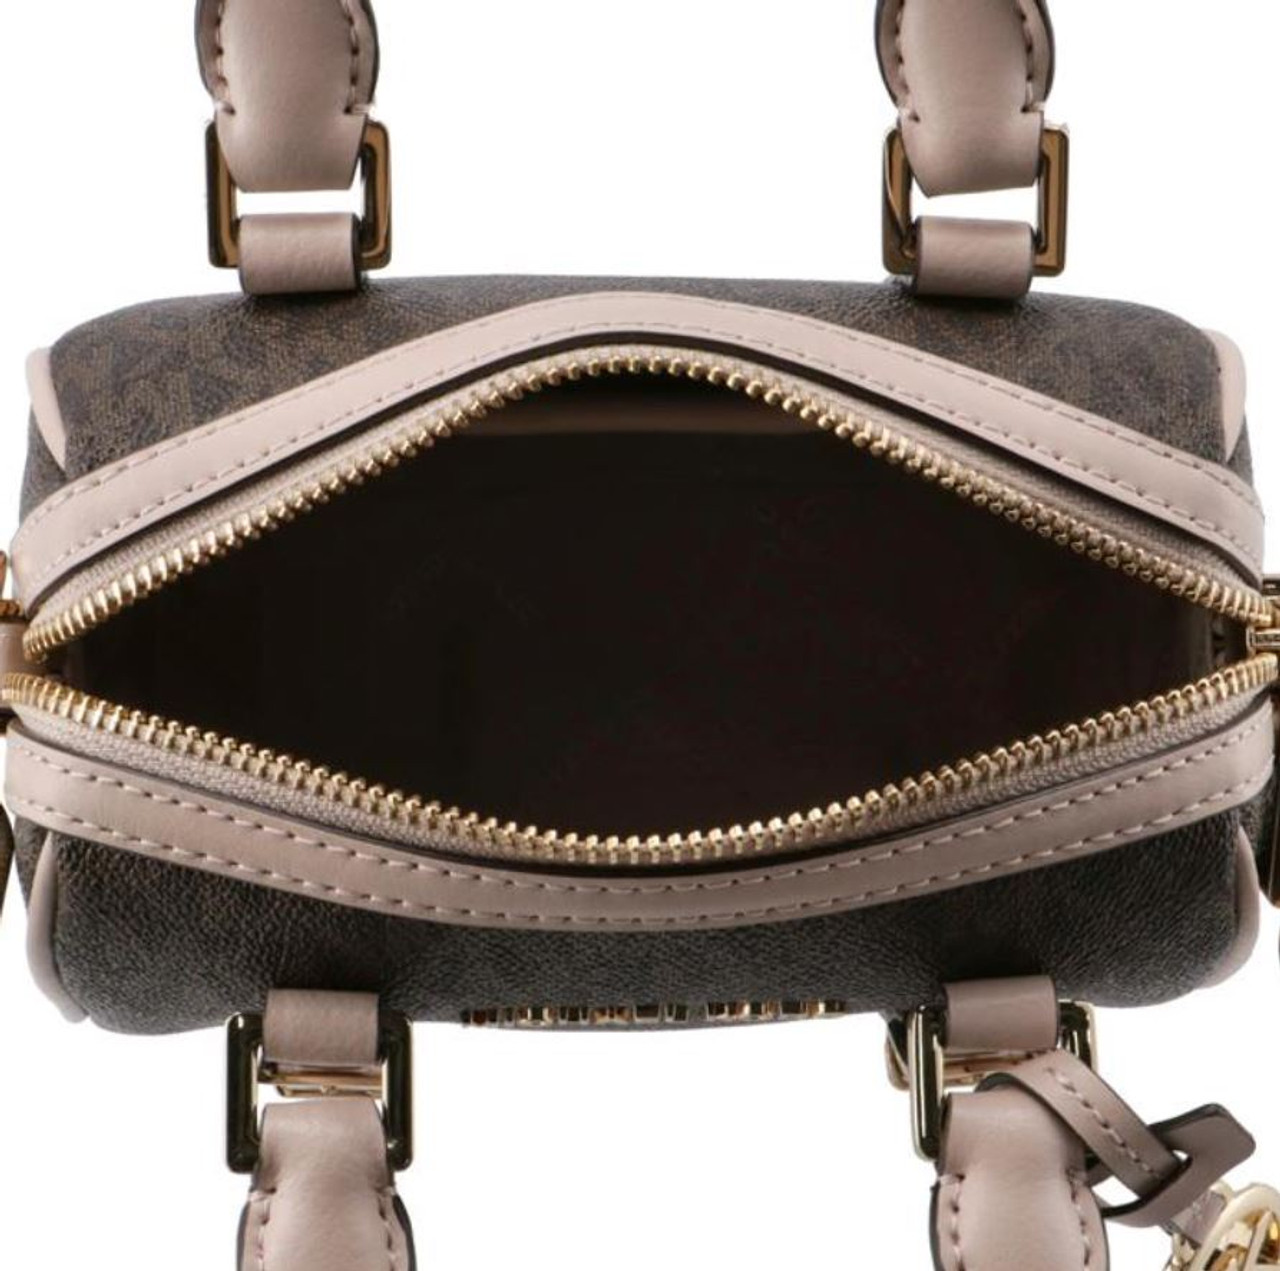 Michael Kors Bedford Legacy Extra-Small Vanilla/Acorn Duffel Crossbody Bag